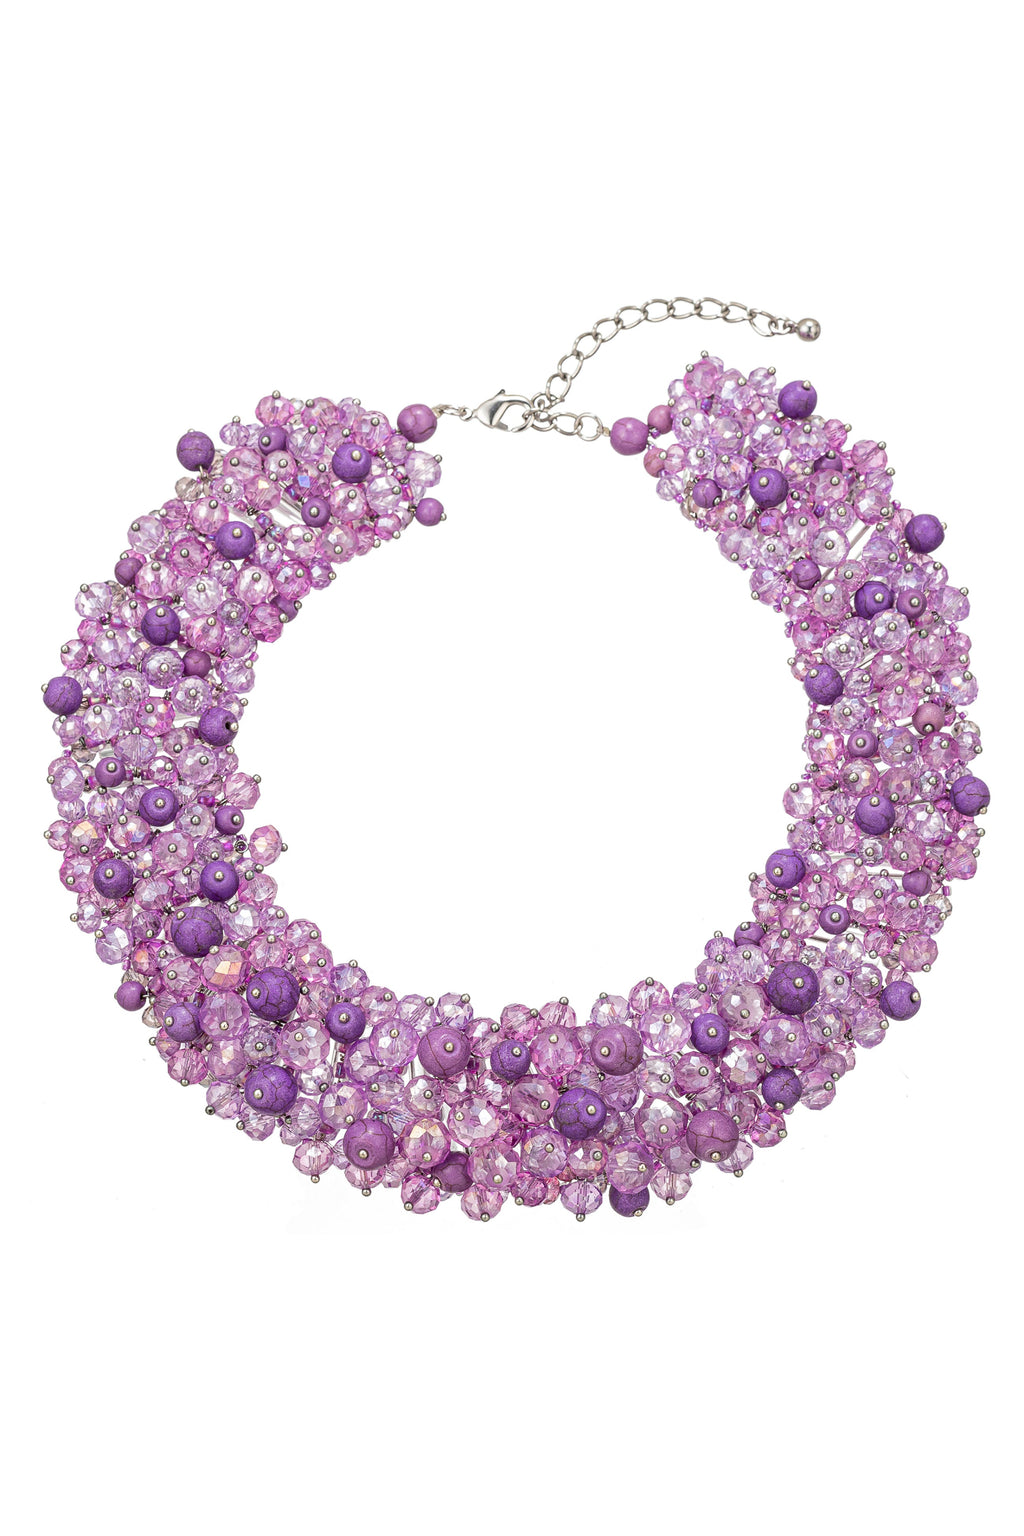 Lavender pink acrylic bead collar necklace